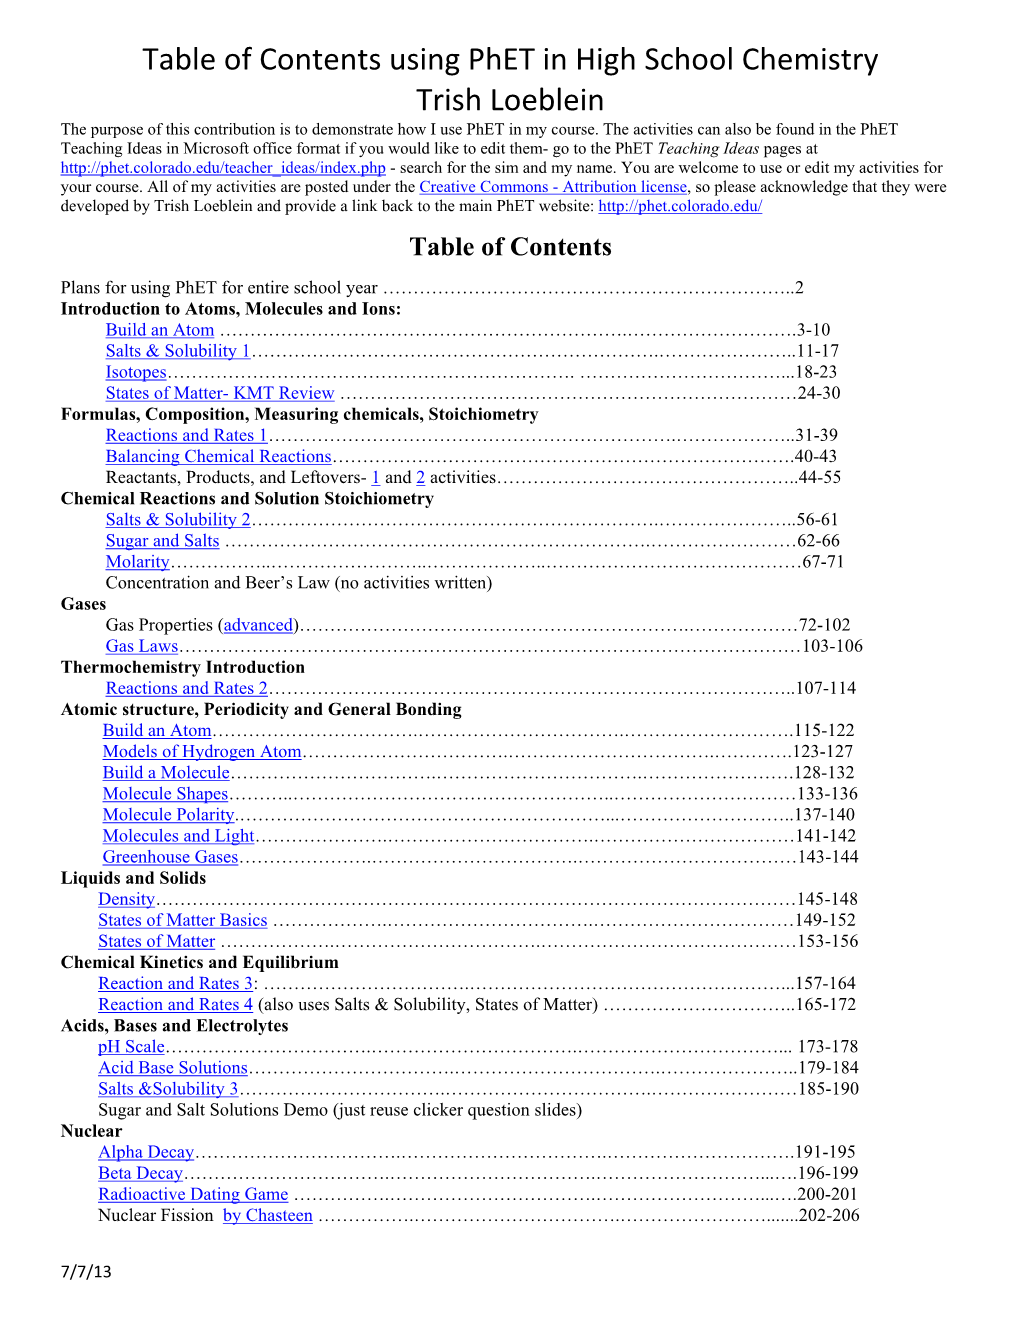 Table of Contents Using Phet in High School Chemistry Trish Loeblein